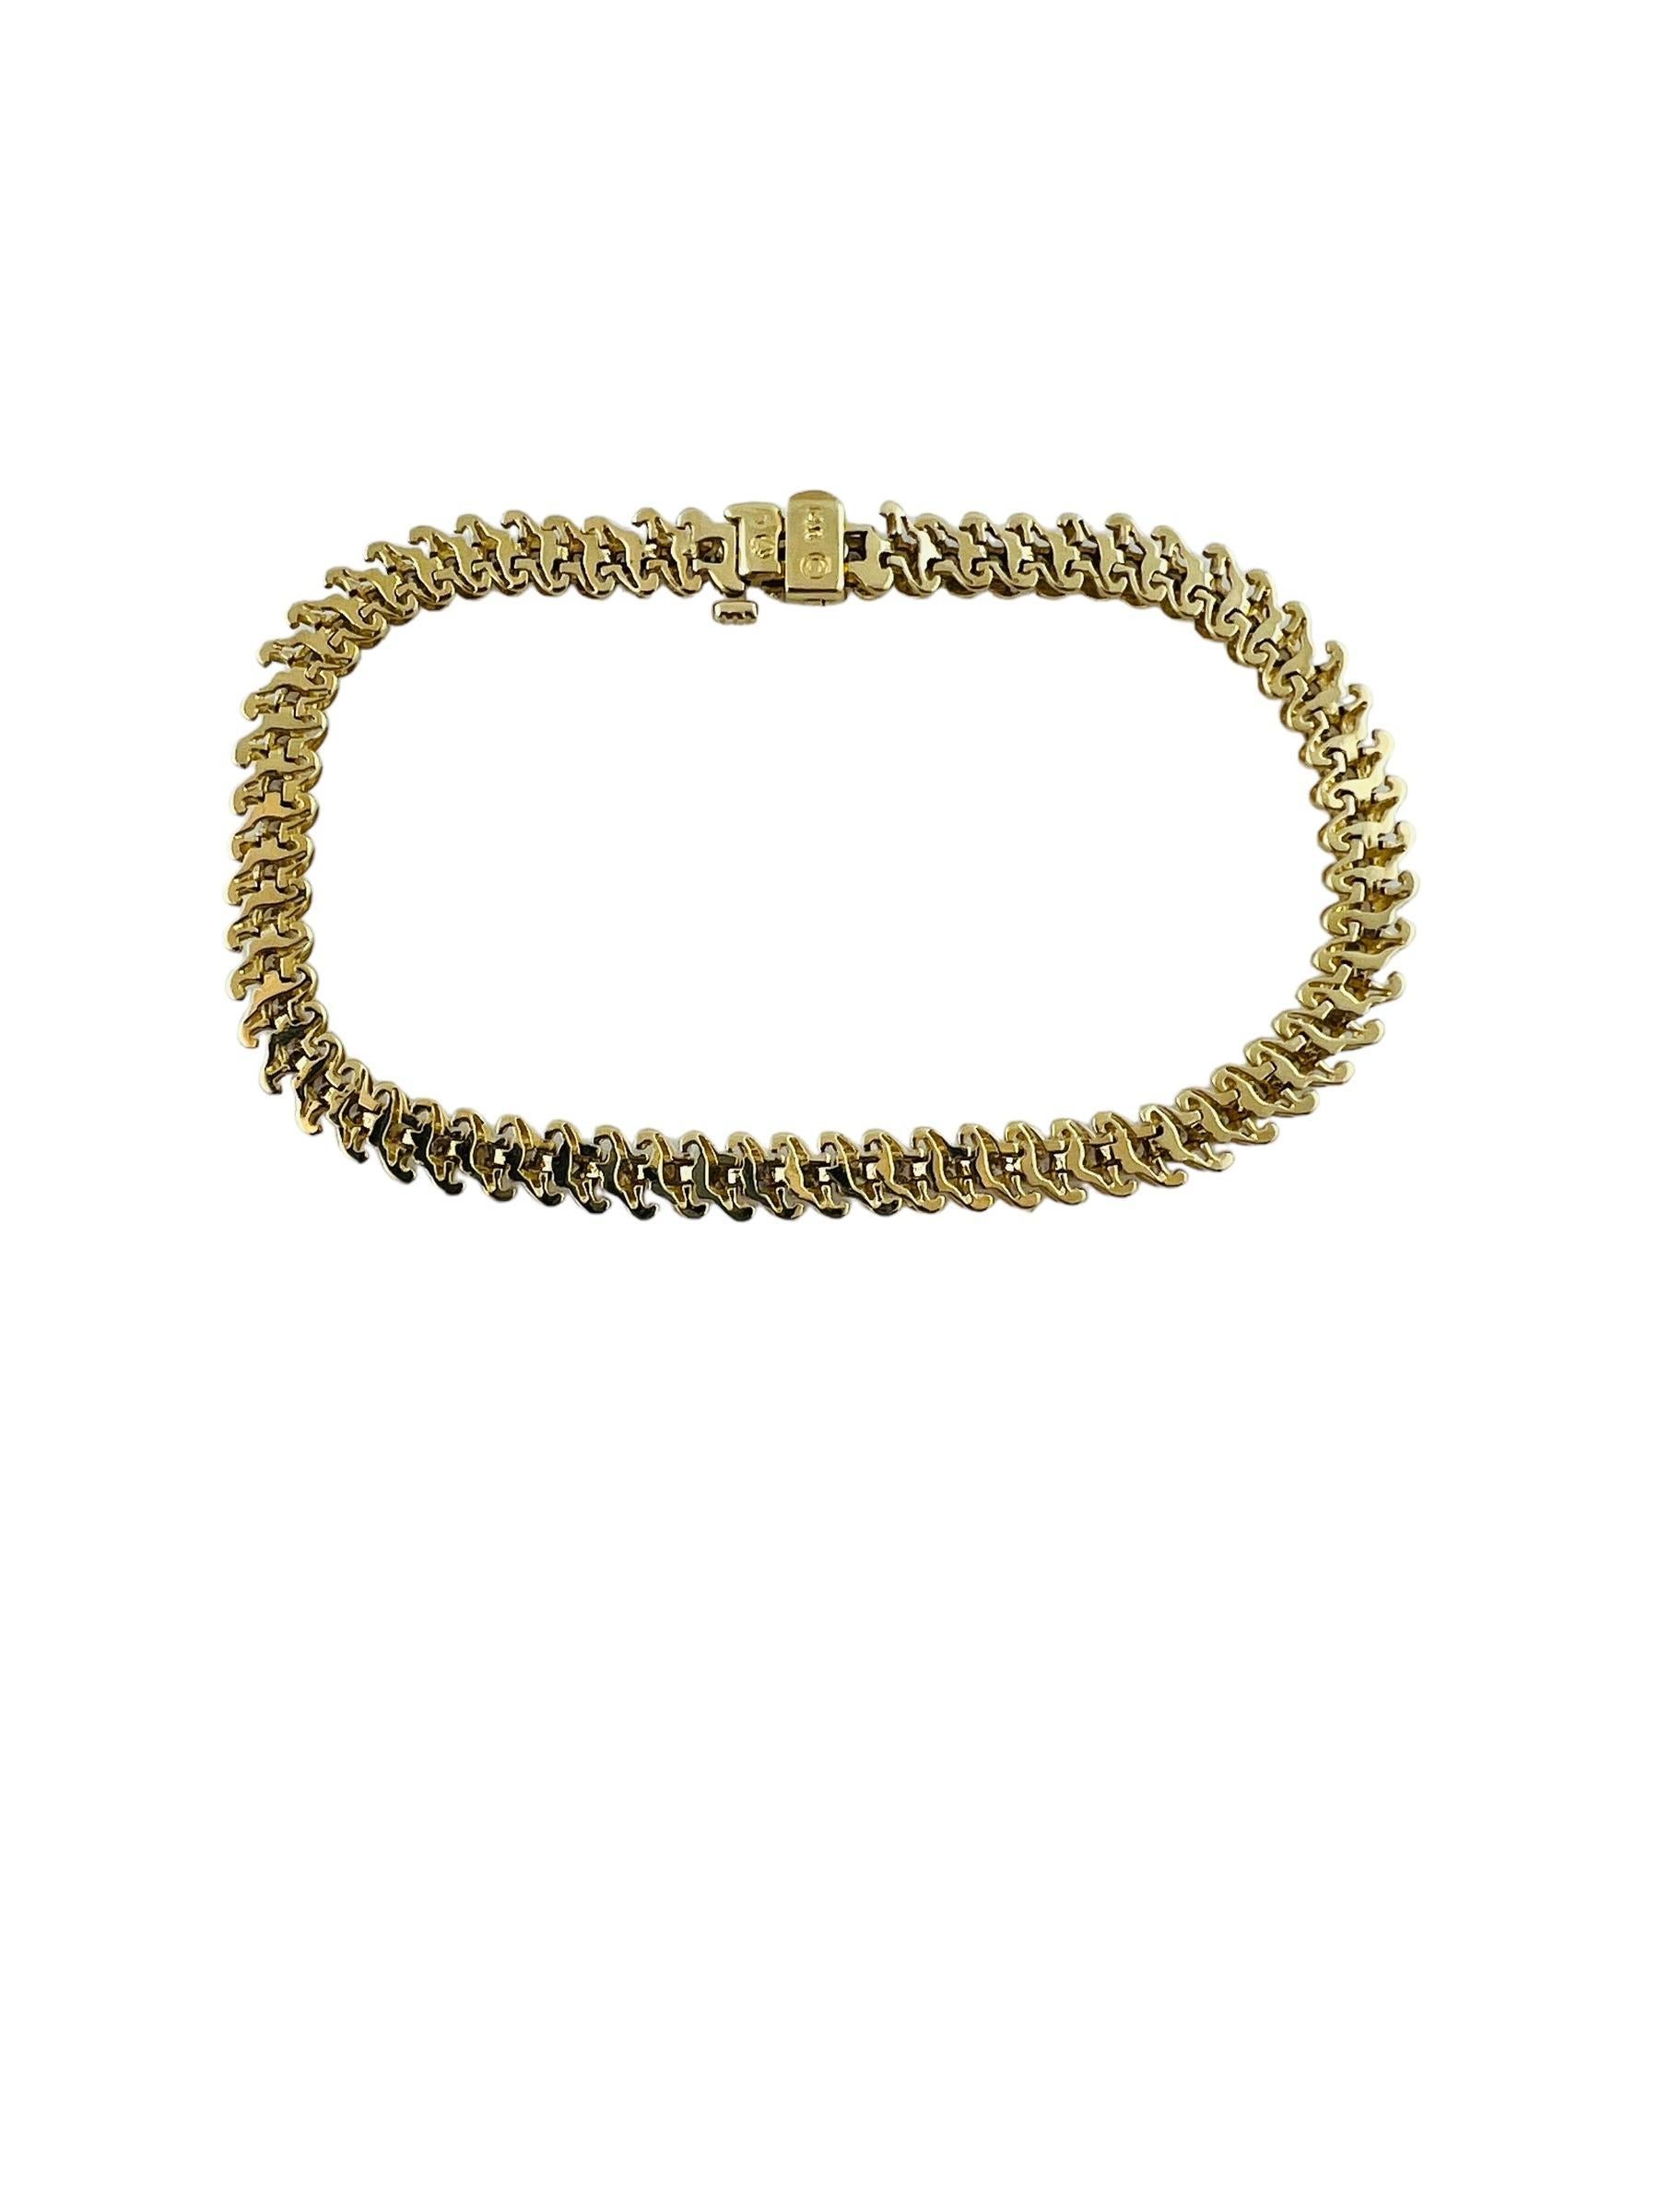 Vintage 14 Karat Yellow Gold Diamond Tennis Bracelet 3.25 TCW.-

This sparkling tennis bracelet features 65 round brilliant cut diamonds set in classic 14K yellow gold.  Width:  5 mm.

Approximate total diamond weight: 3.25  ct.

Diamond clarity: